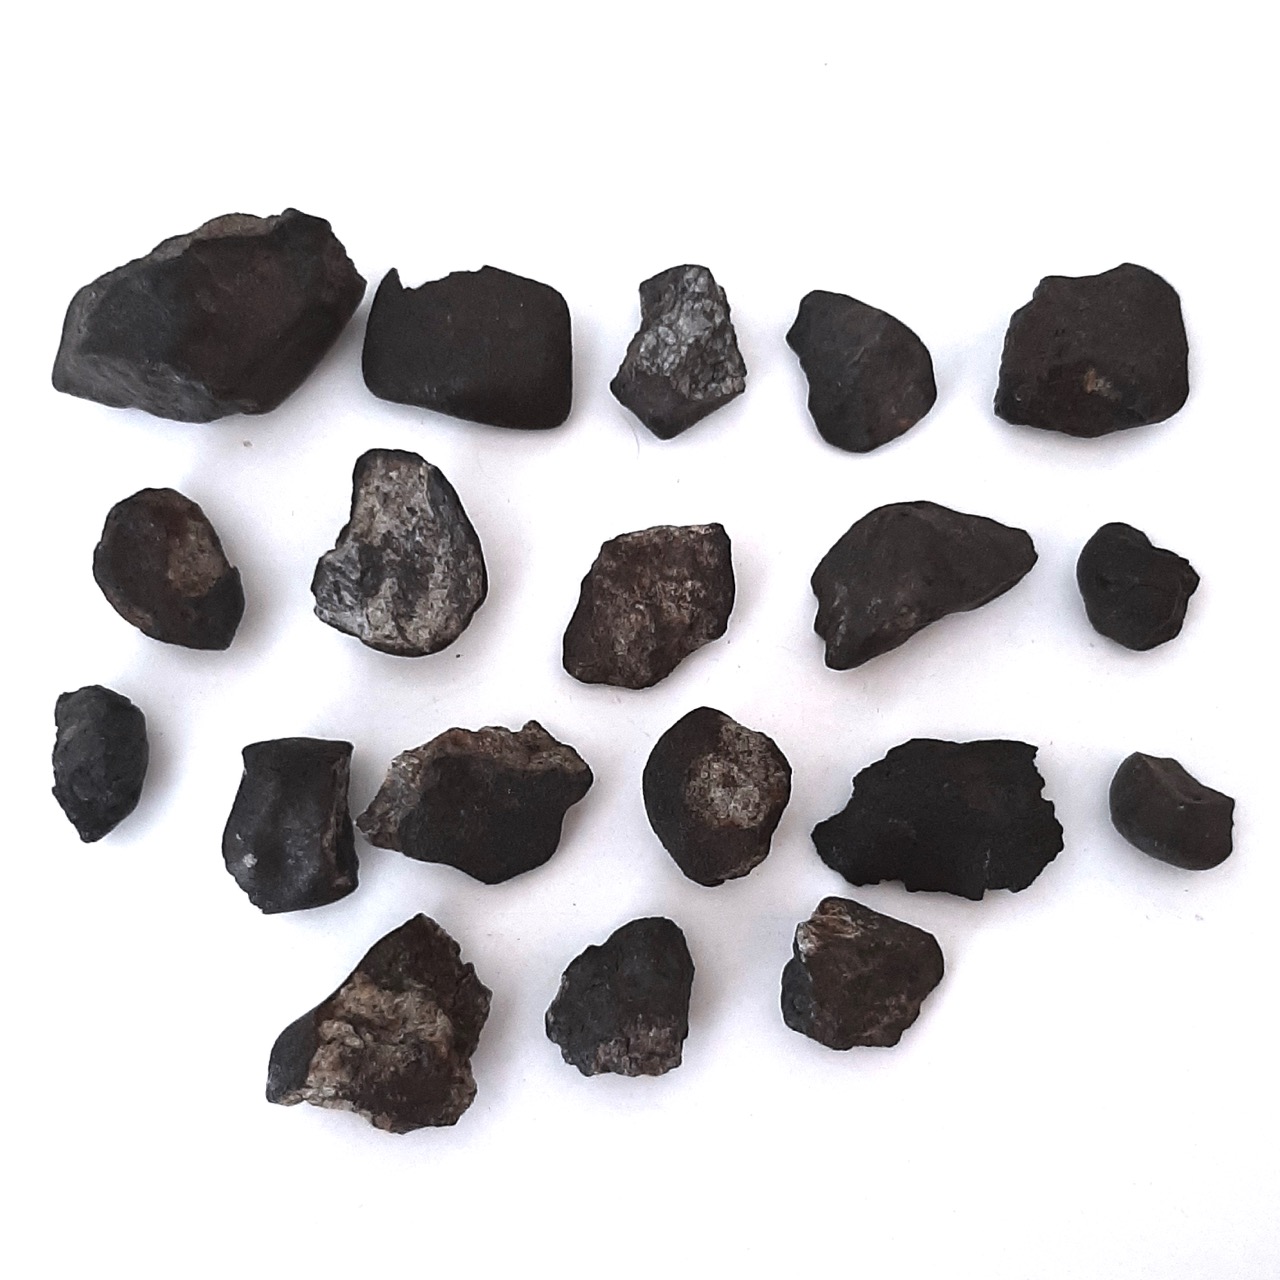 Chelyabinsk meteorite. Lot.